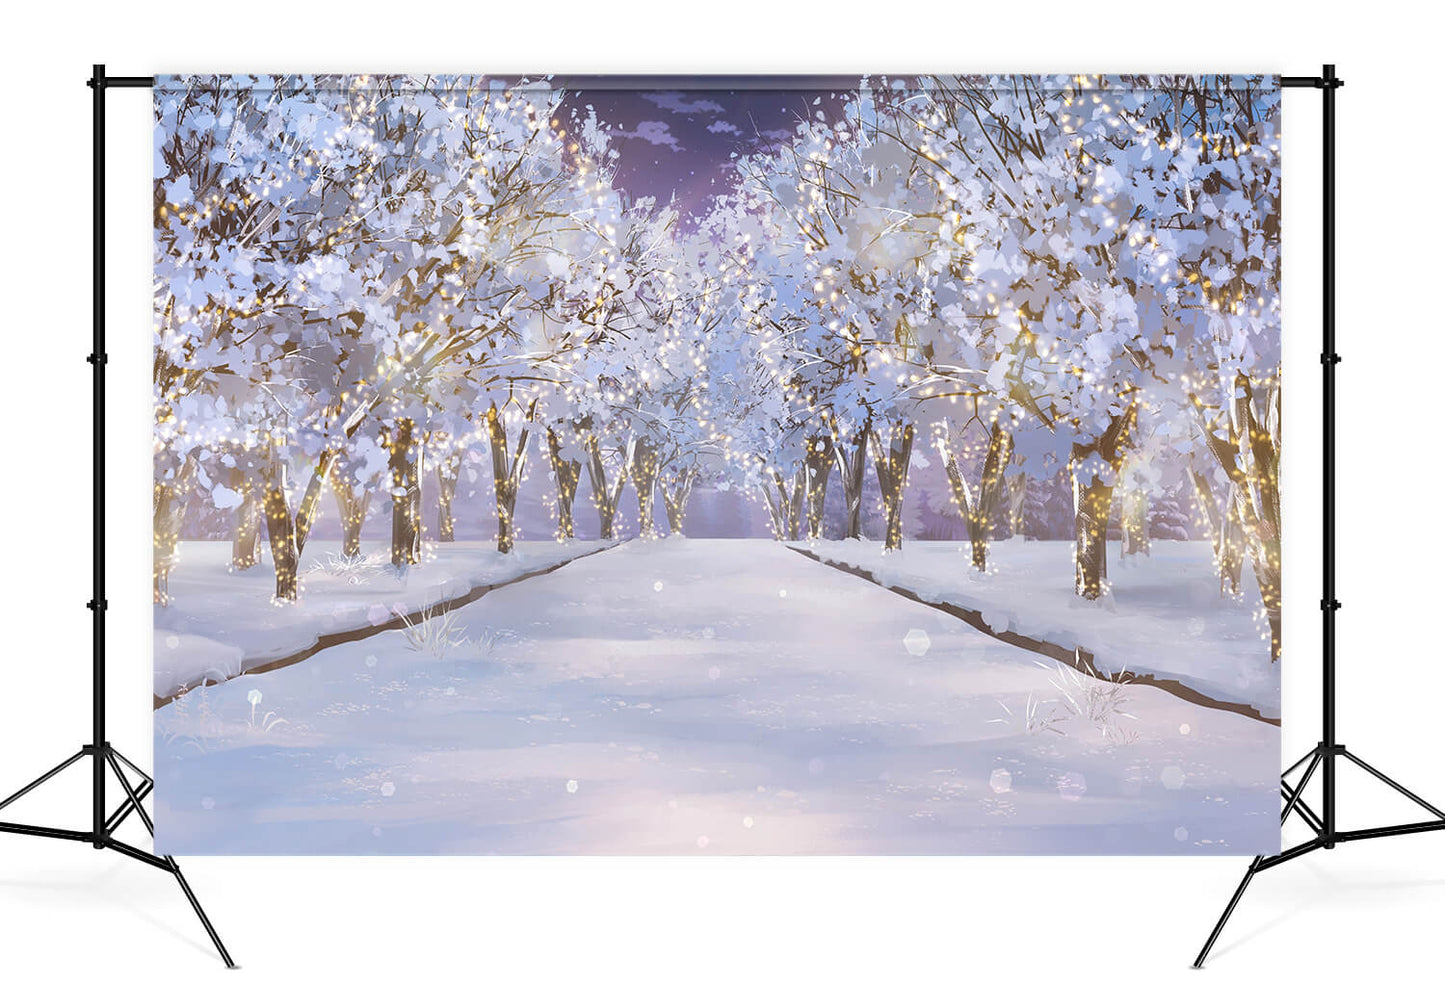 Winter Snow Forest Wonderland Scenery Backdrop M10-61